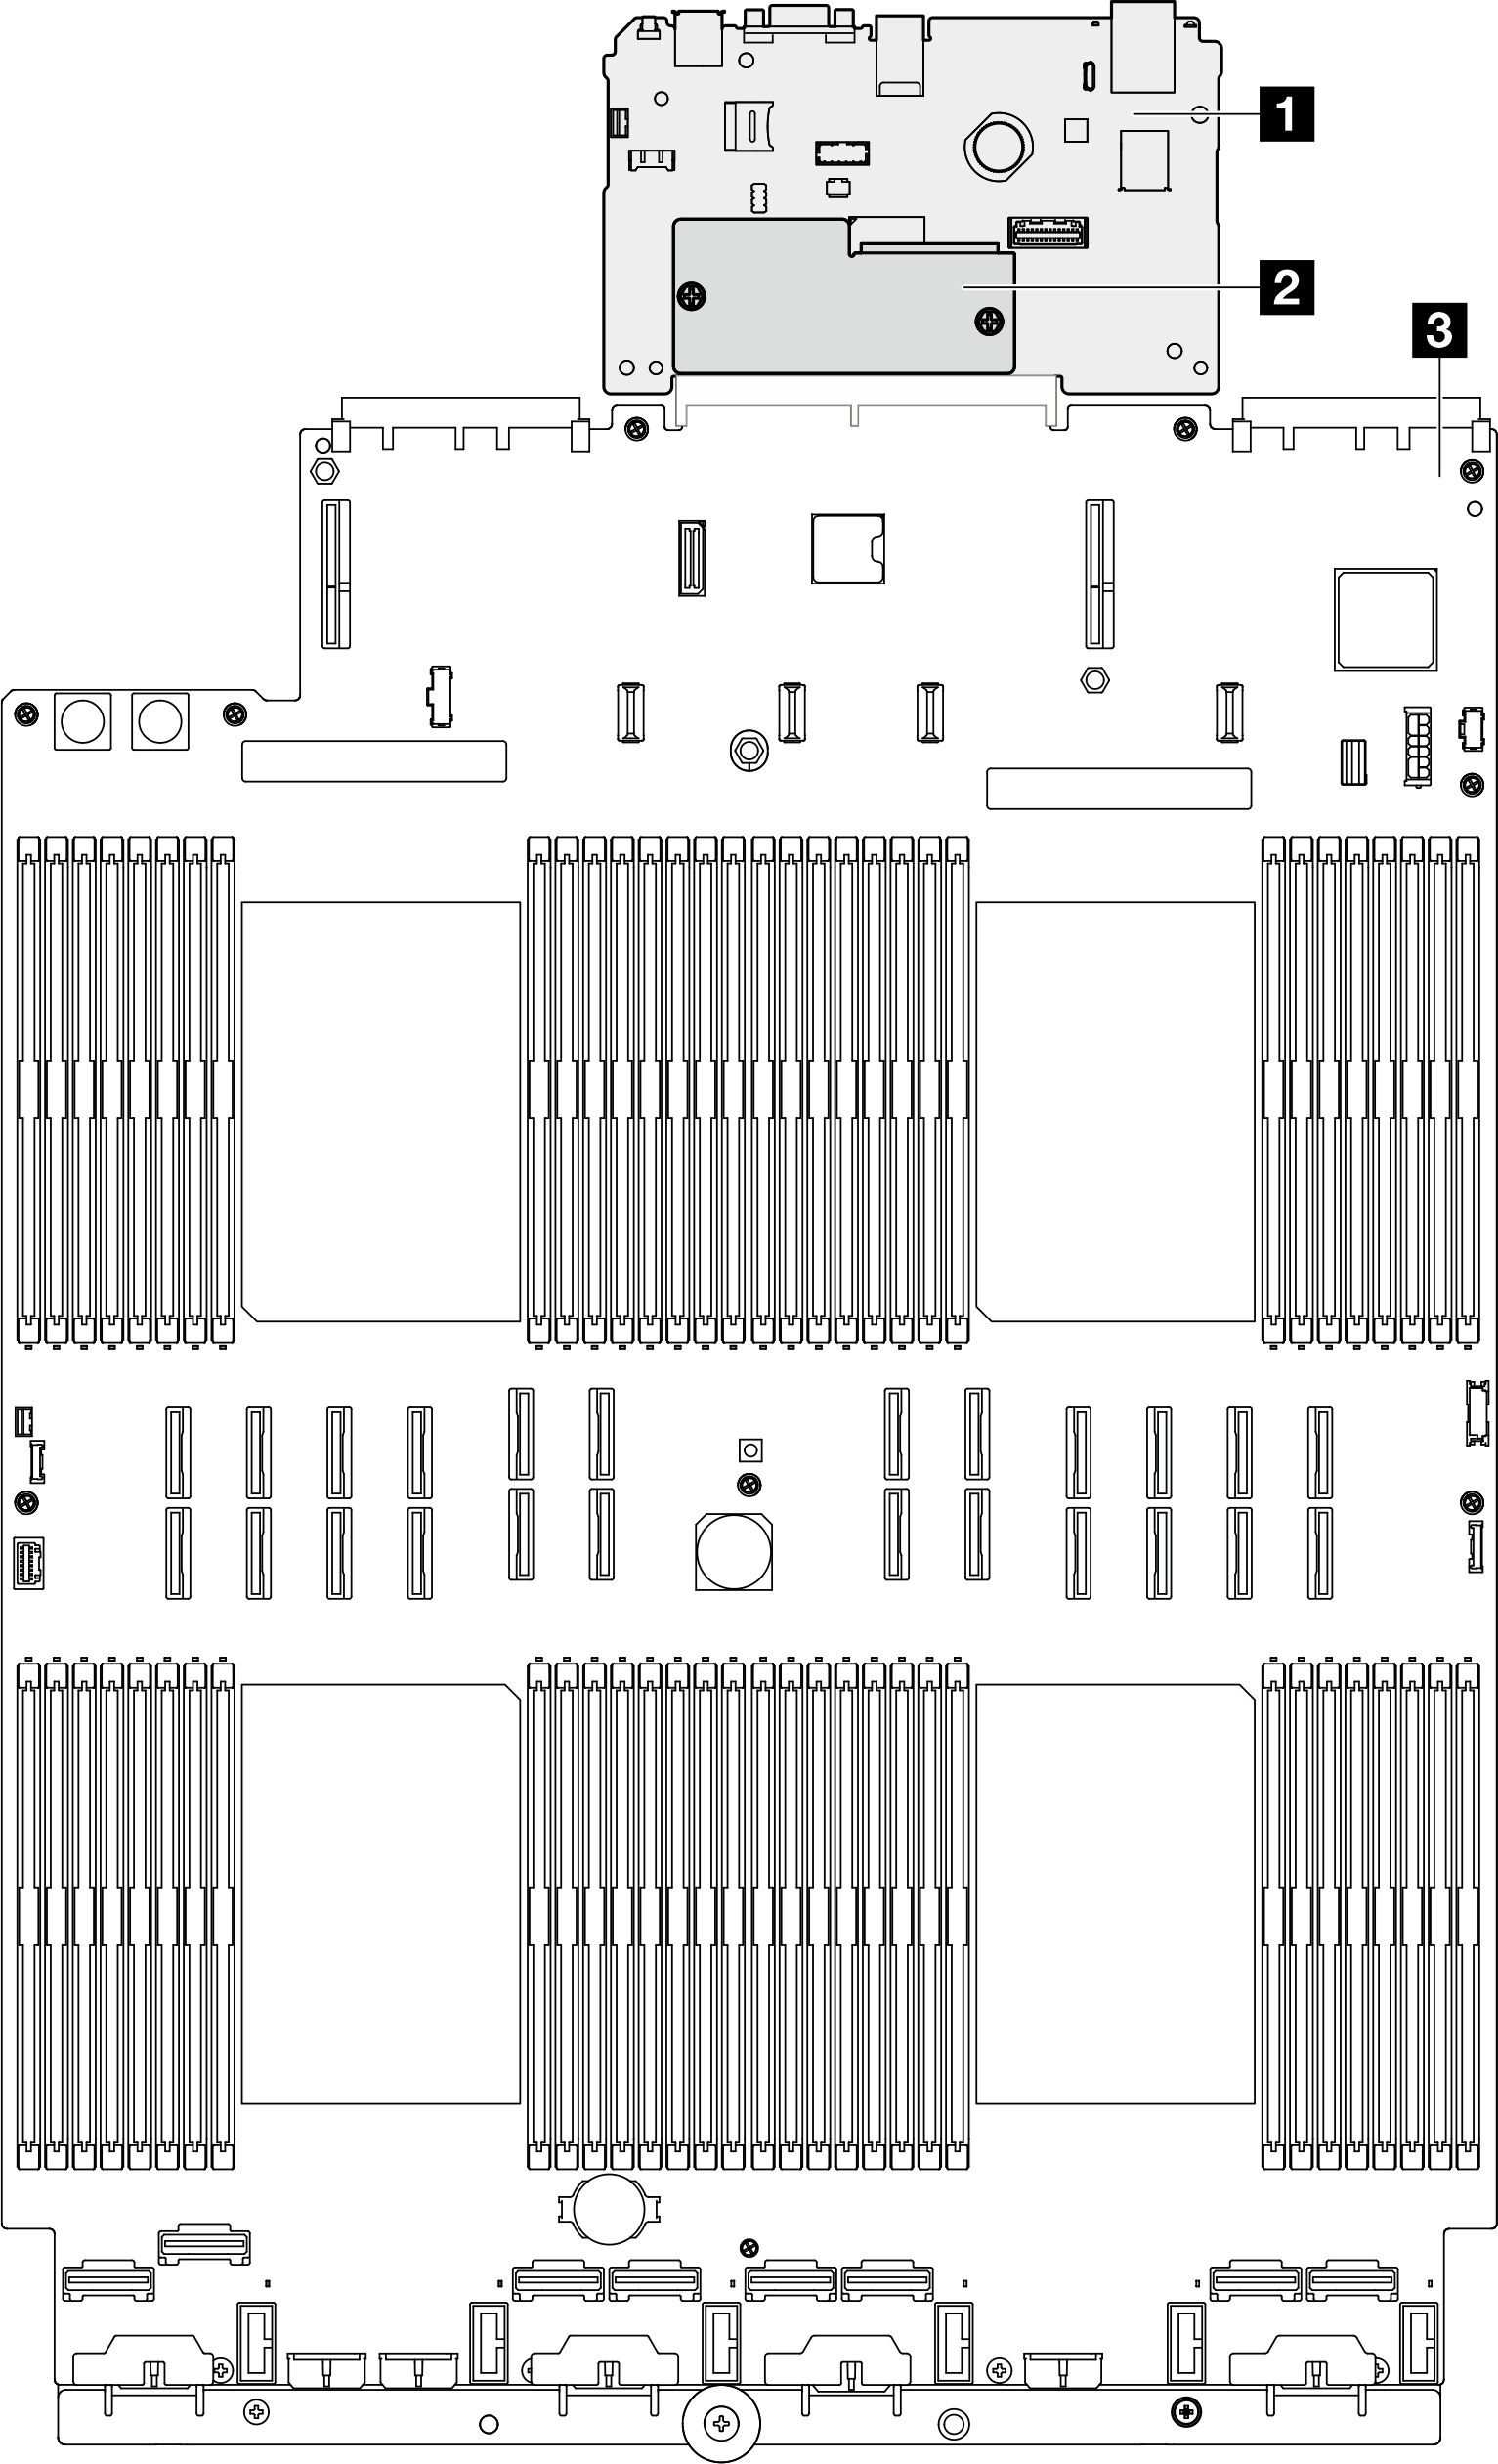 System board assembly layout